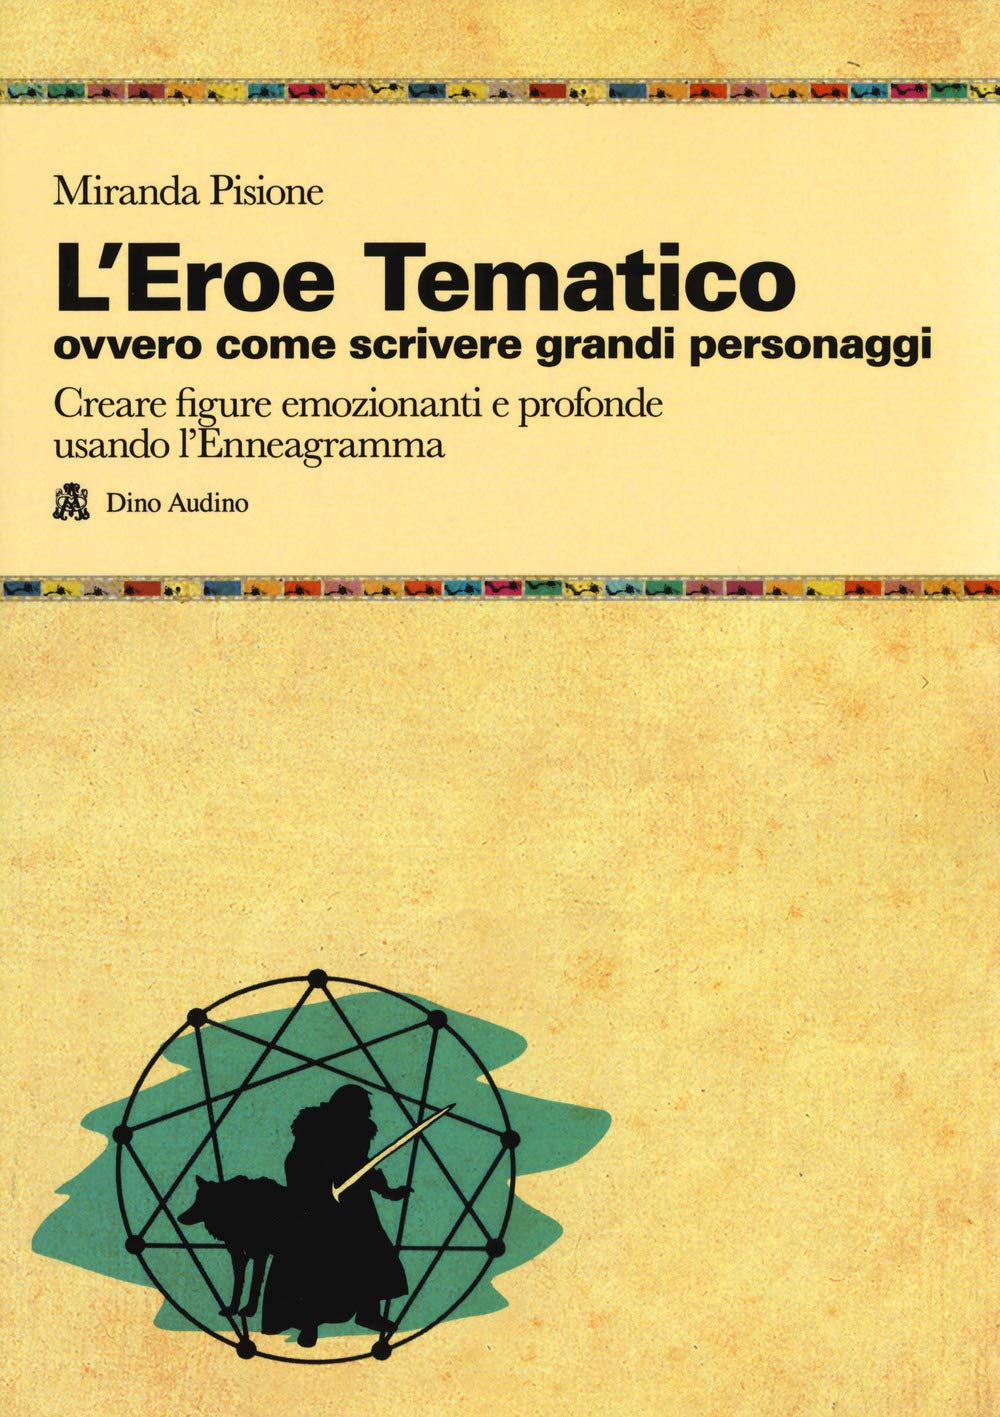 L'eroe Tematico (Paperback, Italiano language, 2019, Audino)